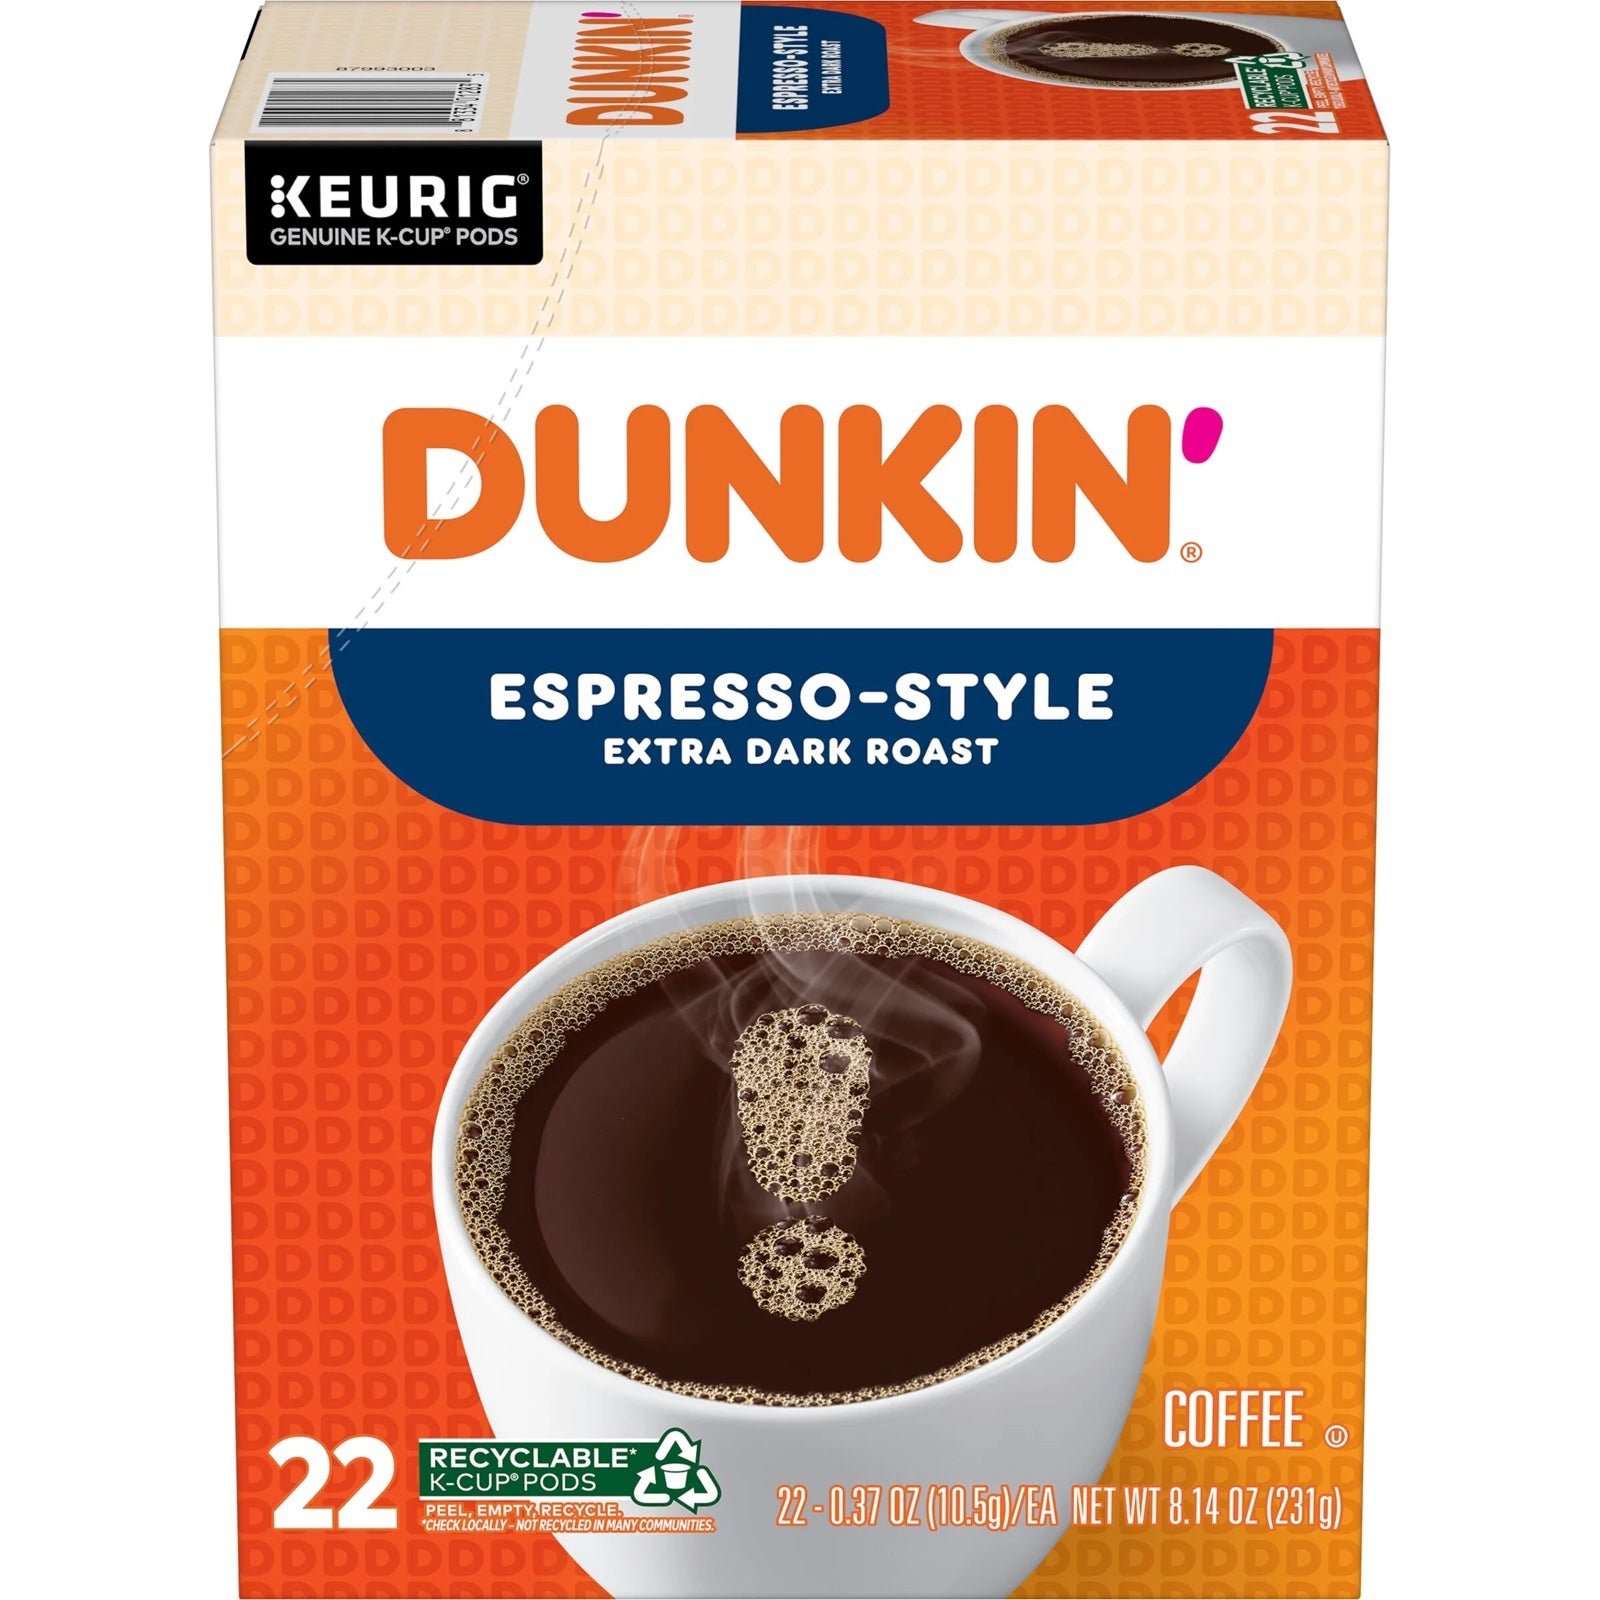 Dunkin’ Espresso-Style Extra Dark Roast, 22 Keurig K-Cup Pods oXHQBMrvm